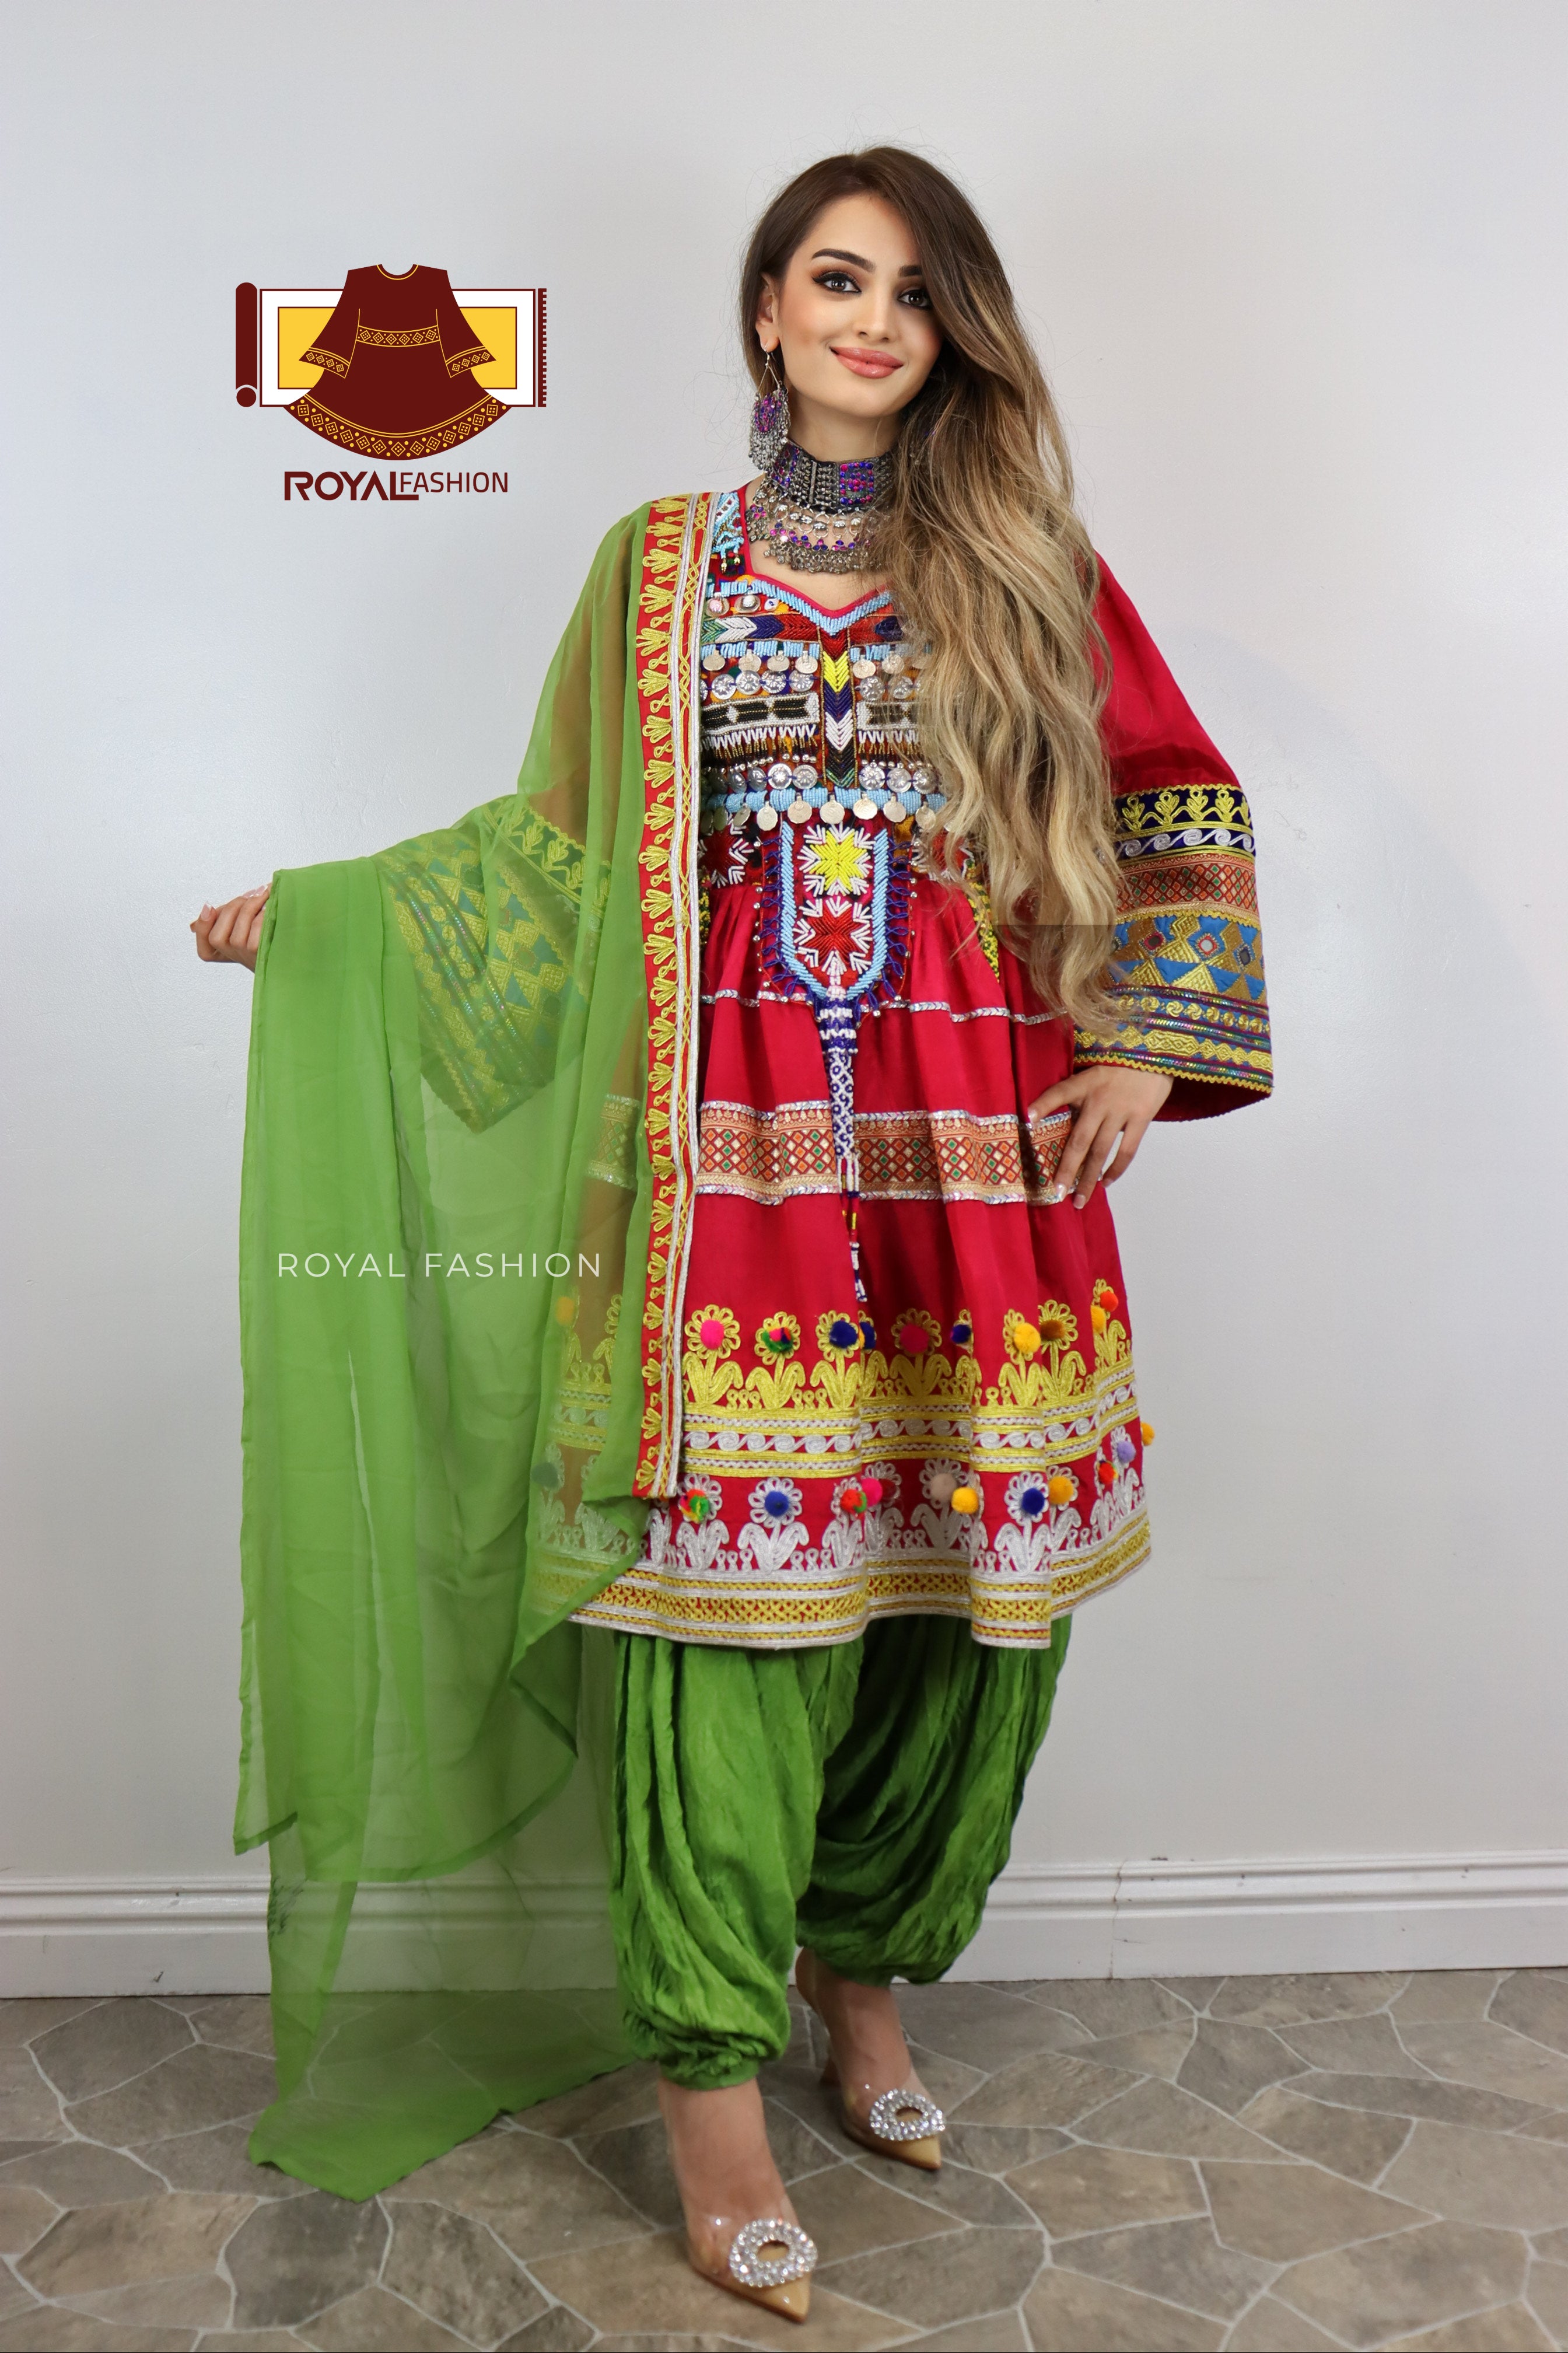 Afghan Dresses, Afghan Kids Dresses, Afghan Traditional Dresses